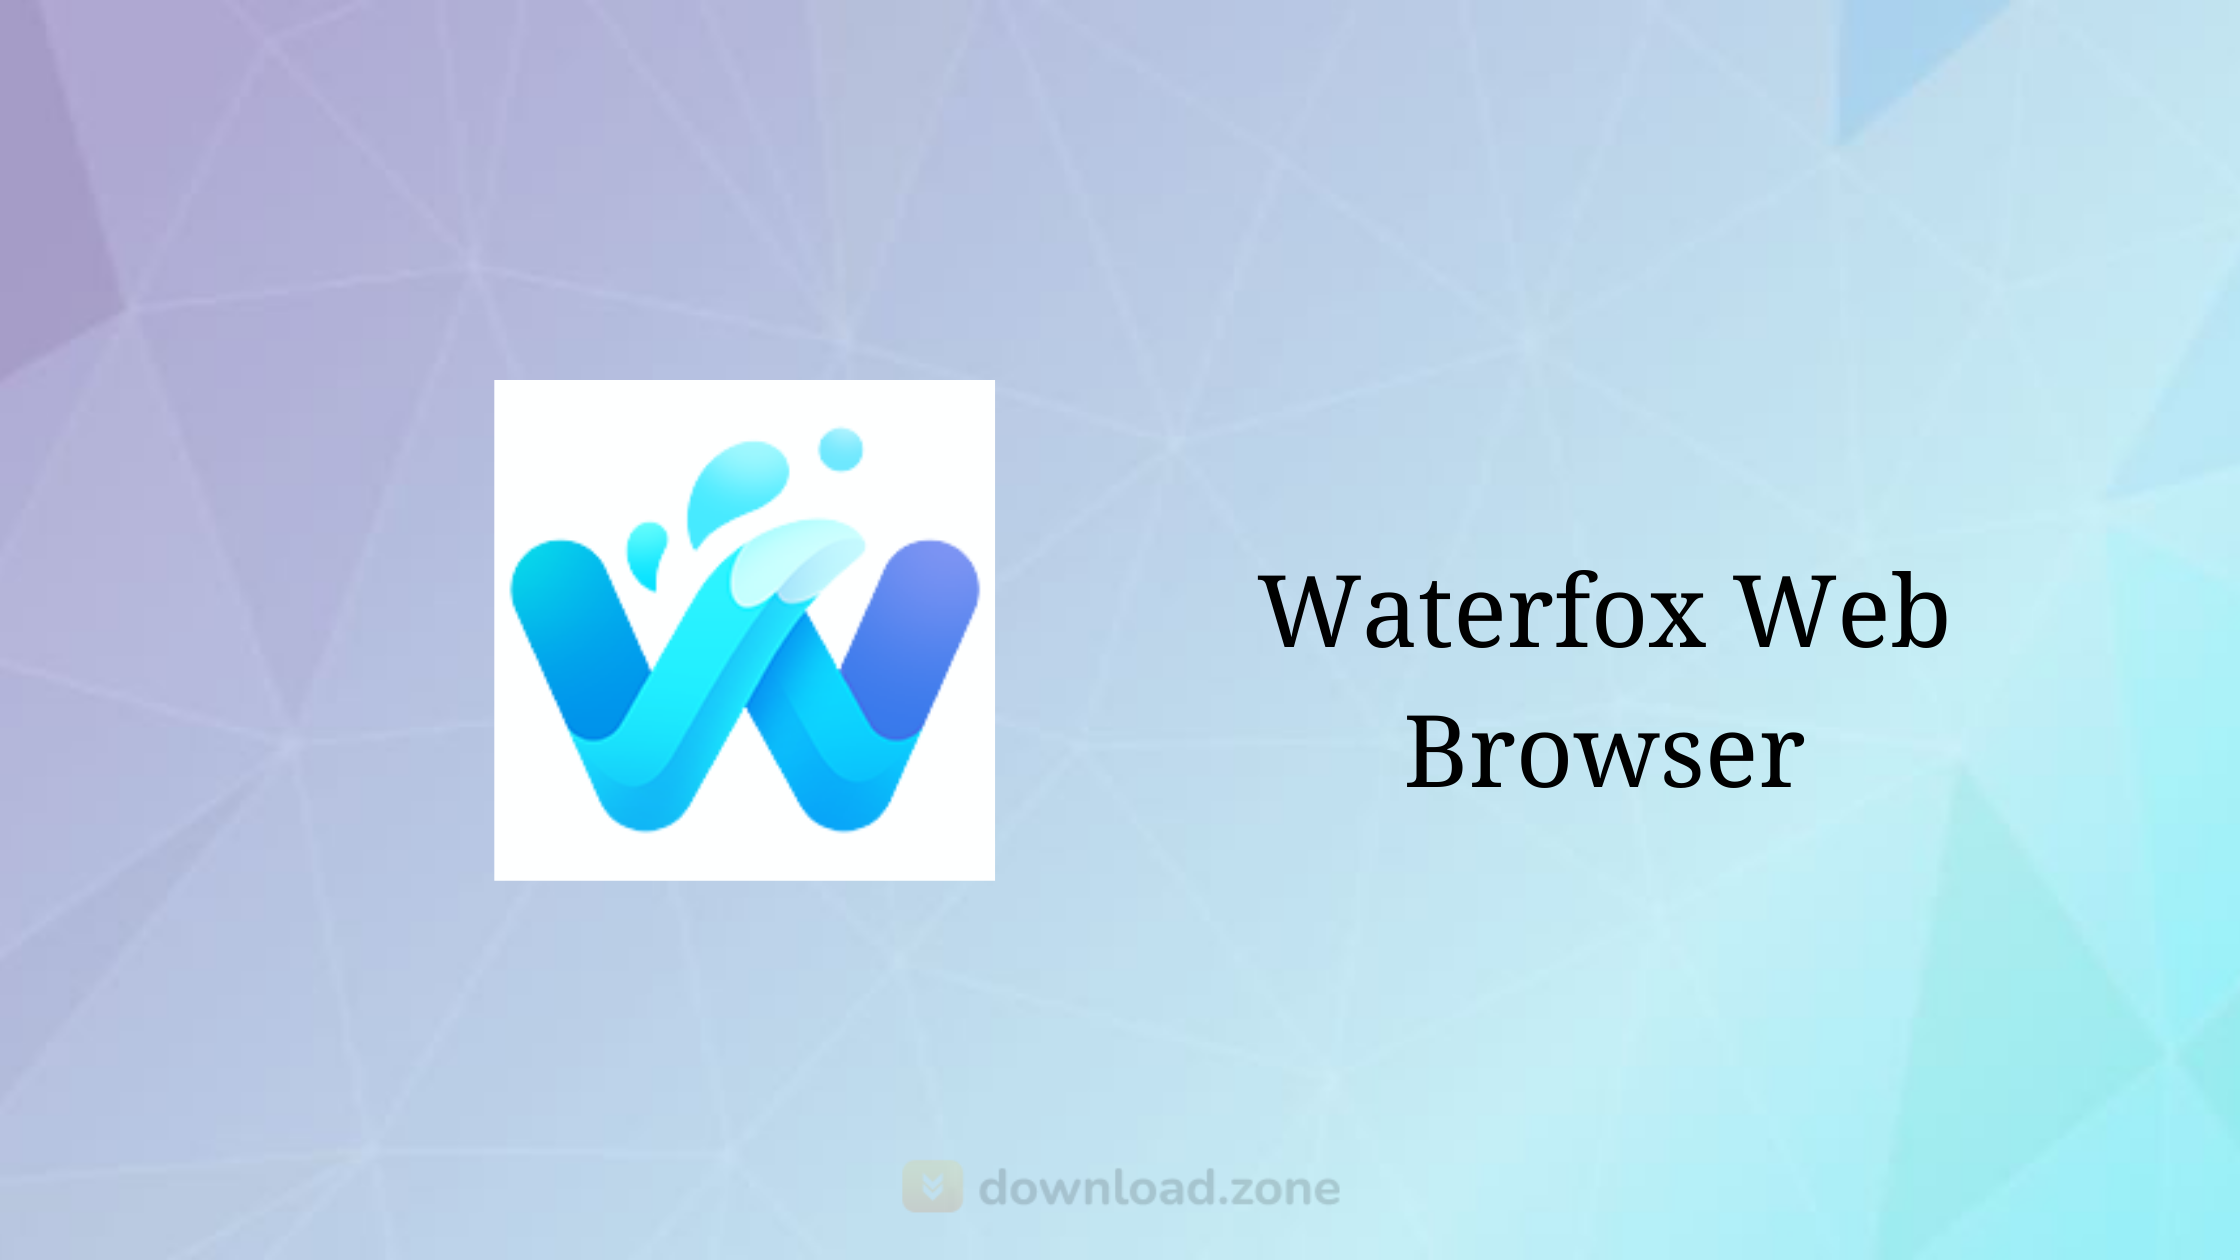 waterfox start page